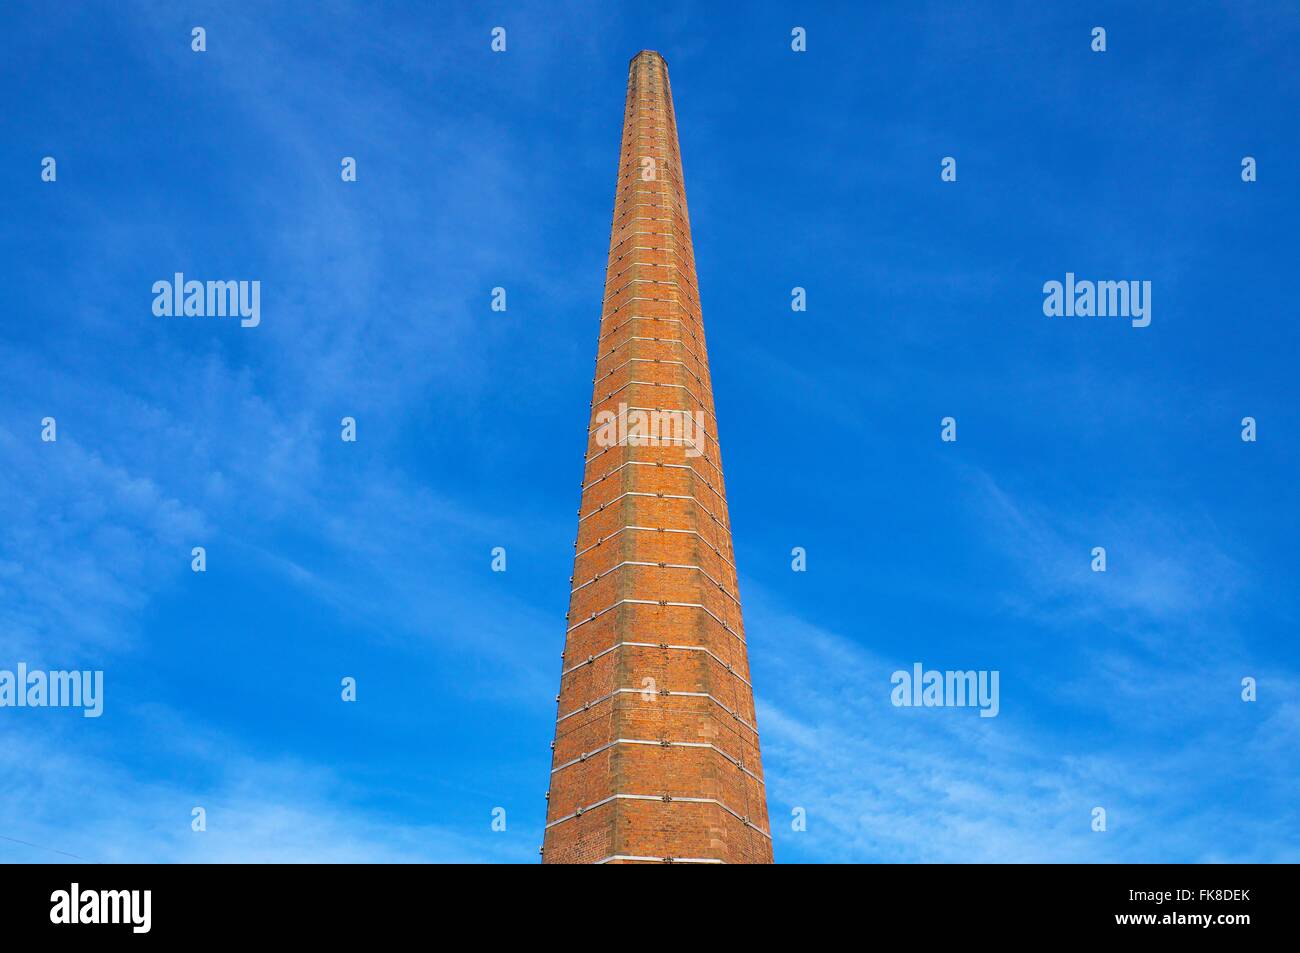 Image result for mill chimney stack